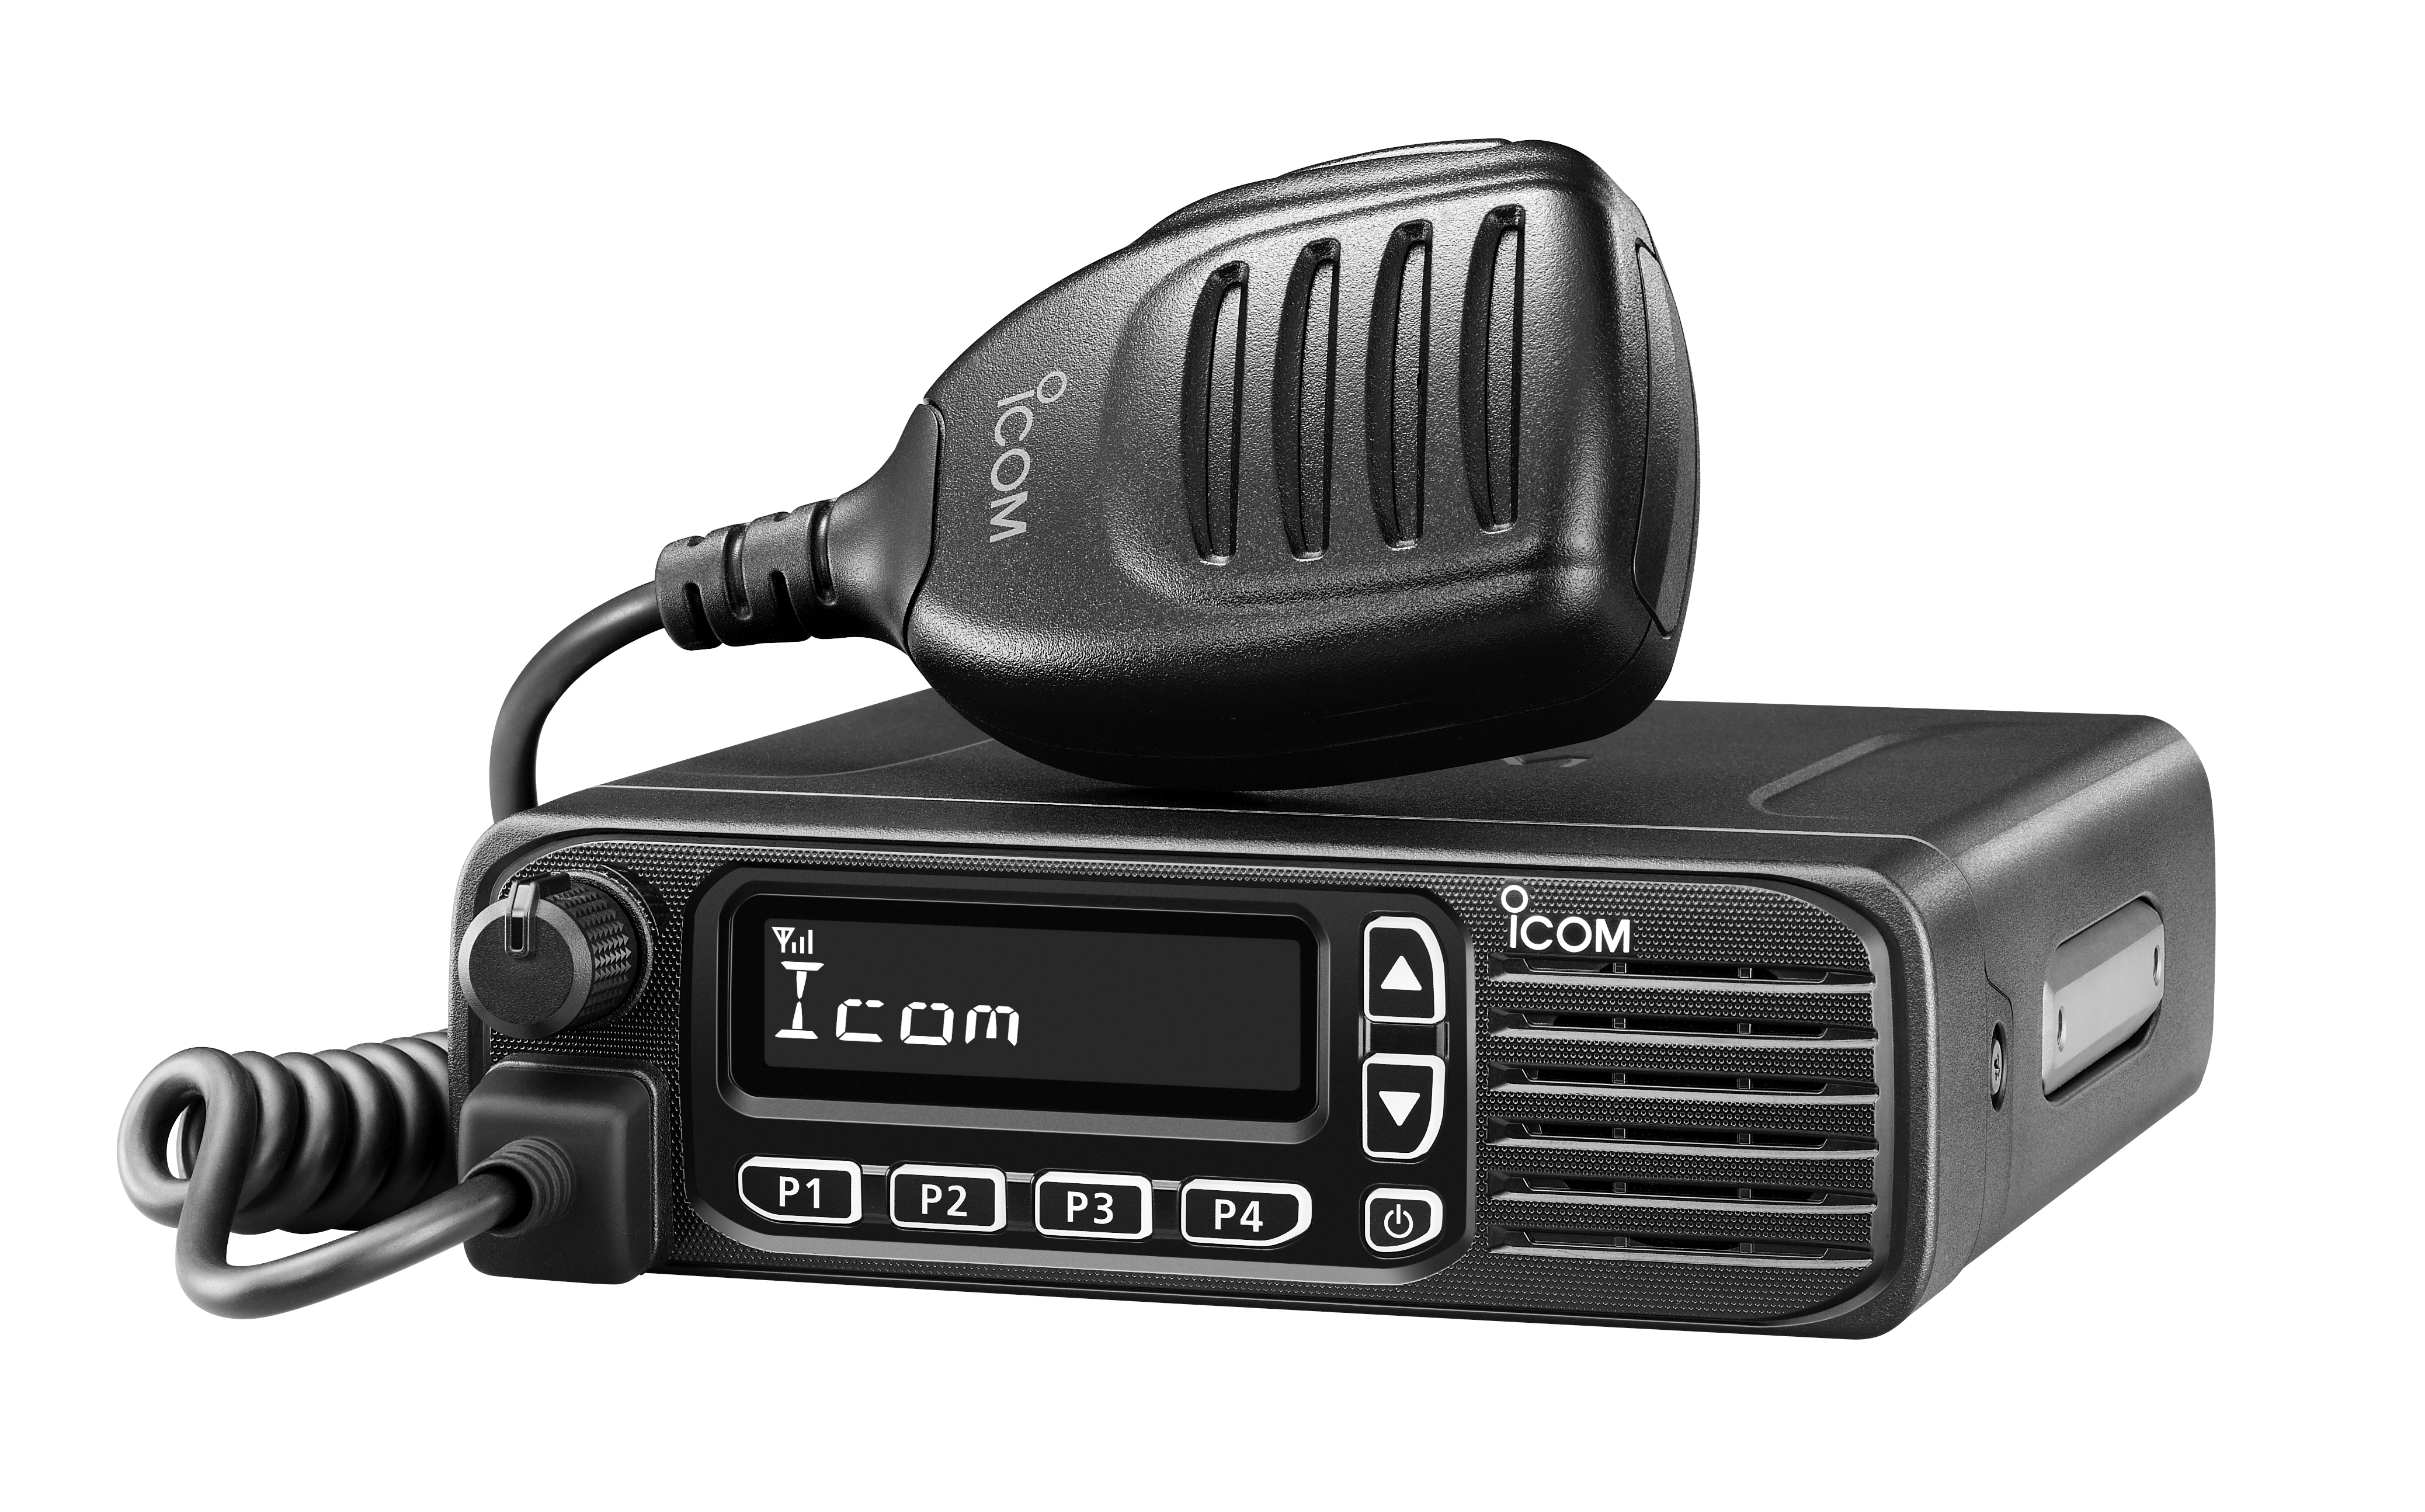 IC-F5130D/F6103D VHF/UHF Digital Mobile Radio Series (Angled Image)